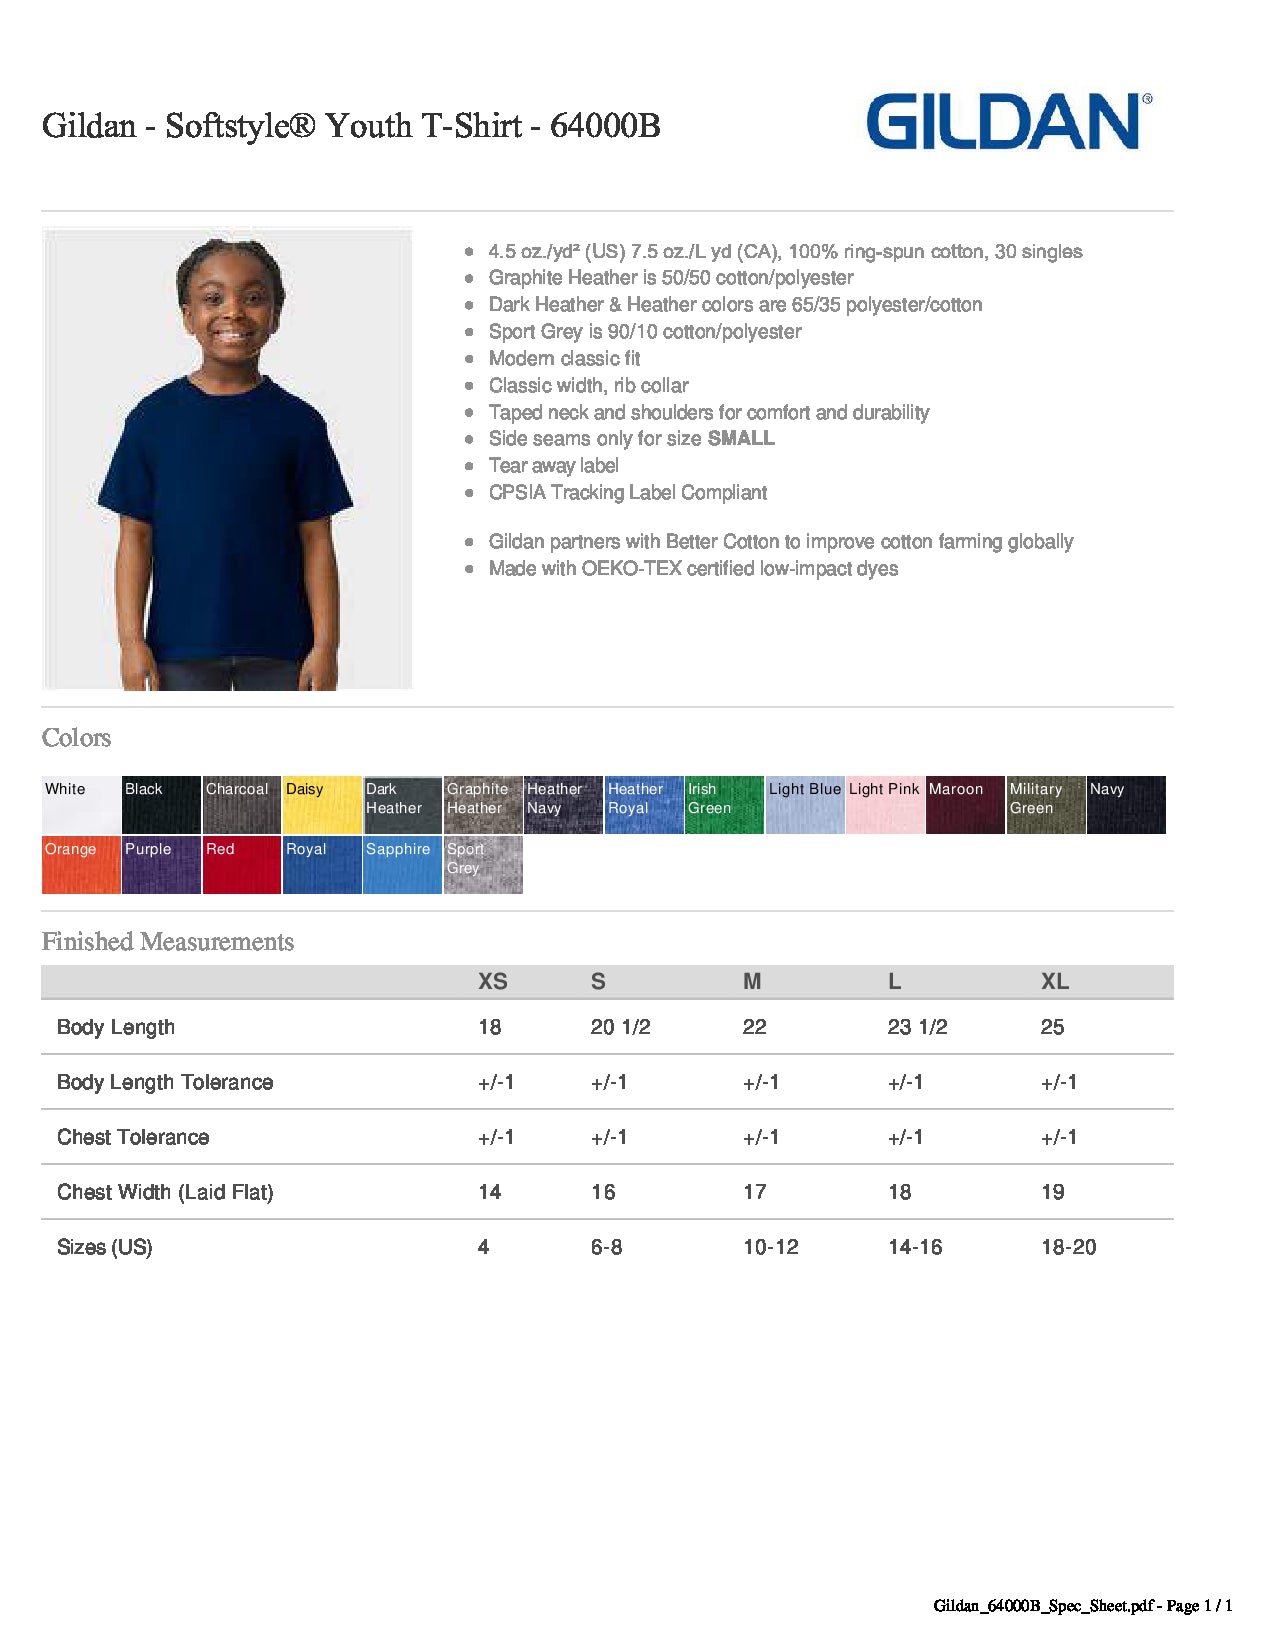 Football T-Shirt - Kansas City Chiefs - Adult and Children's Tee Shirts - Sports T-Shirts Graphic Avenue 